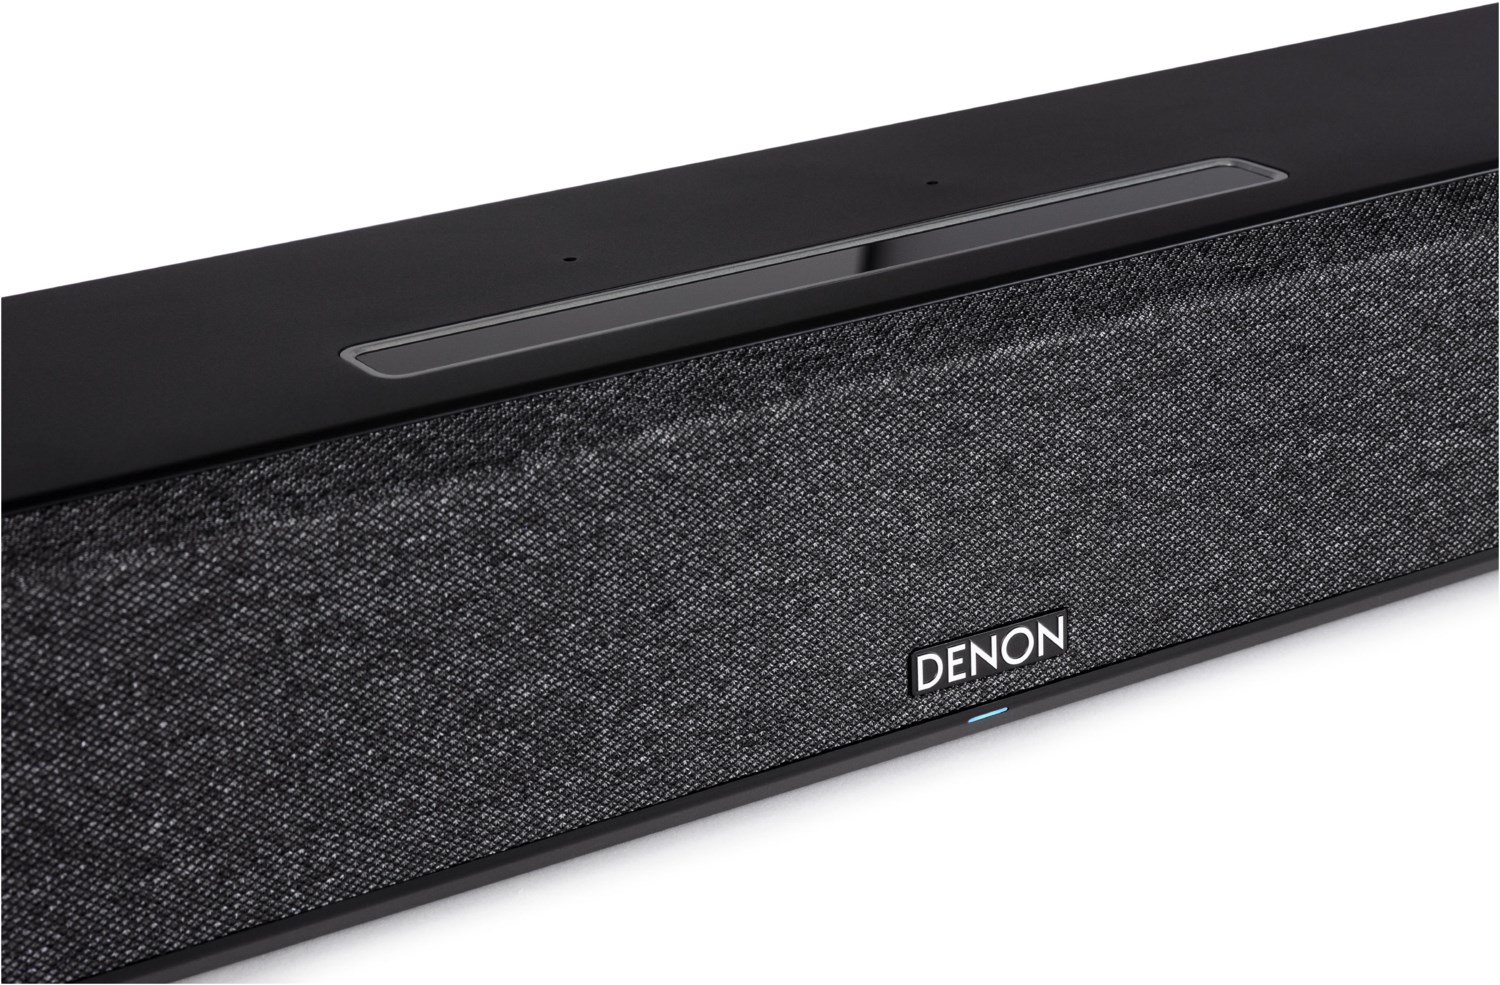 Denon Home 550 Sound Bar WLAN, Bluetooth, AirPlay 2 schwarz